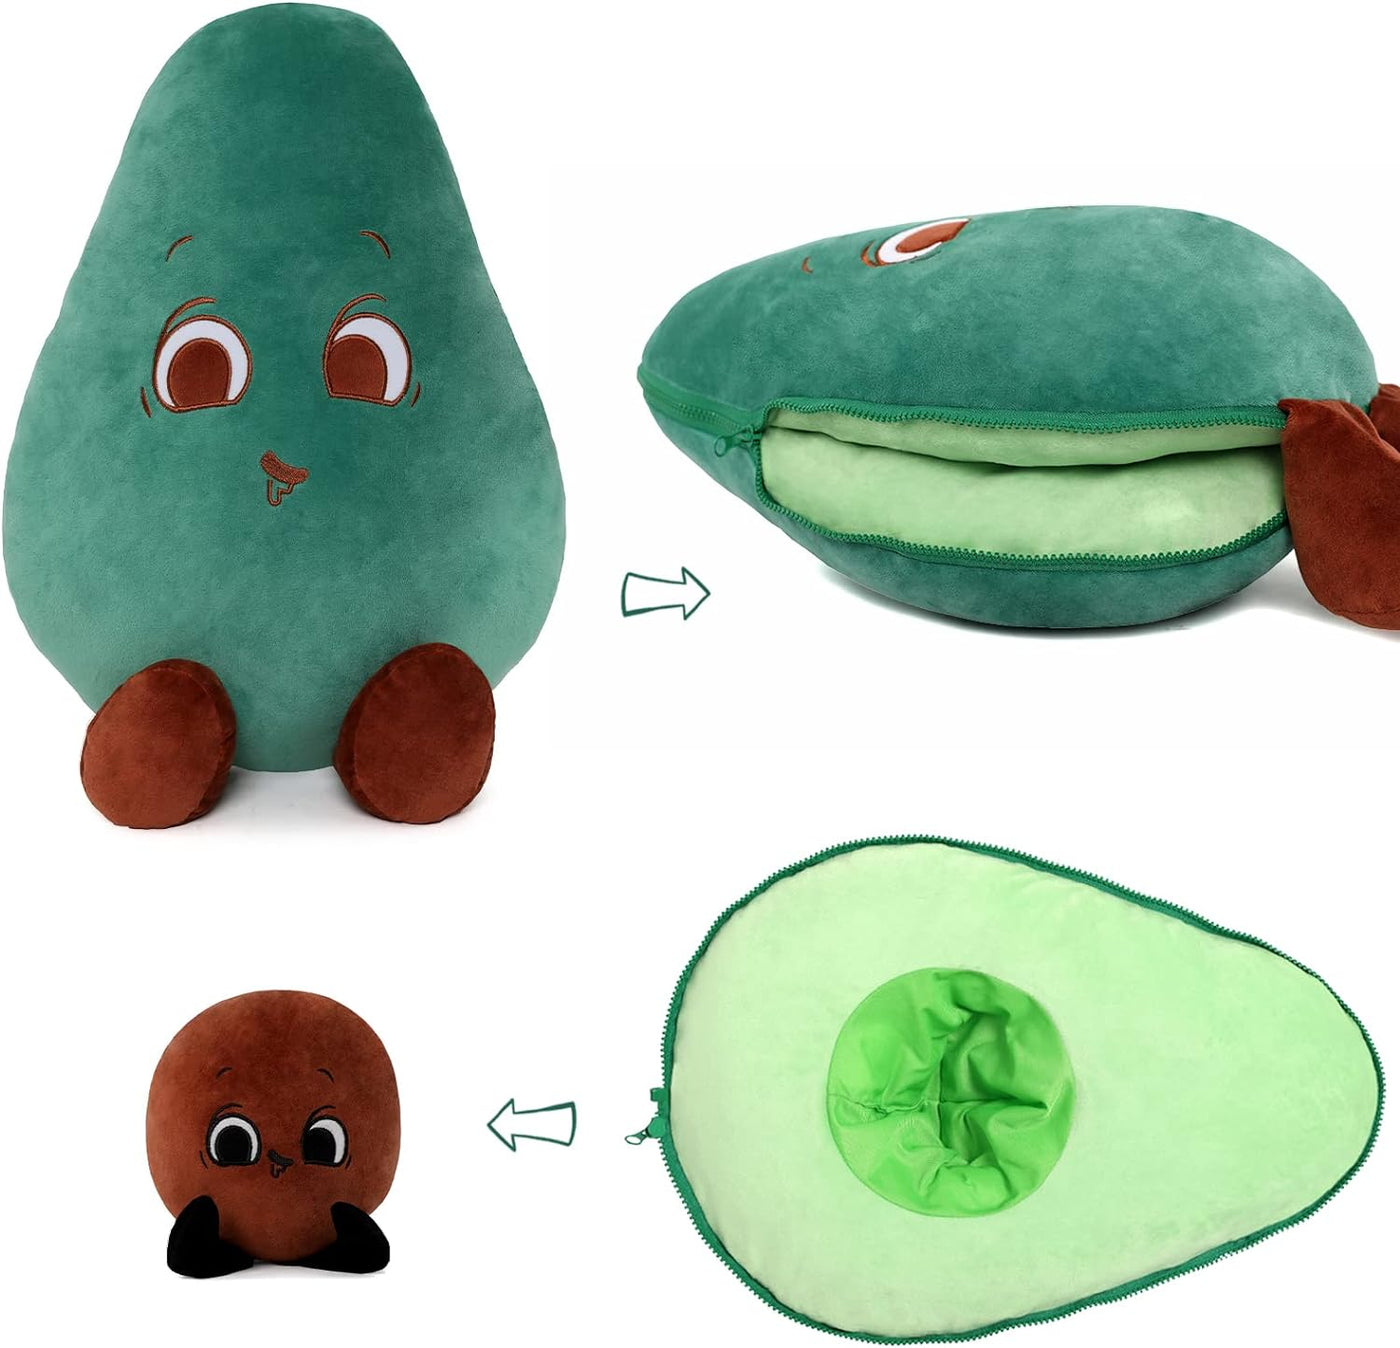 Avocado Stuffed Toy, Dark Green, 20 Inches